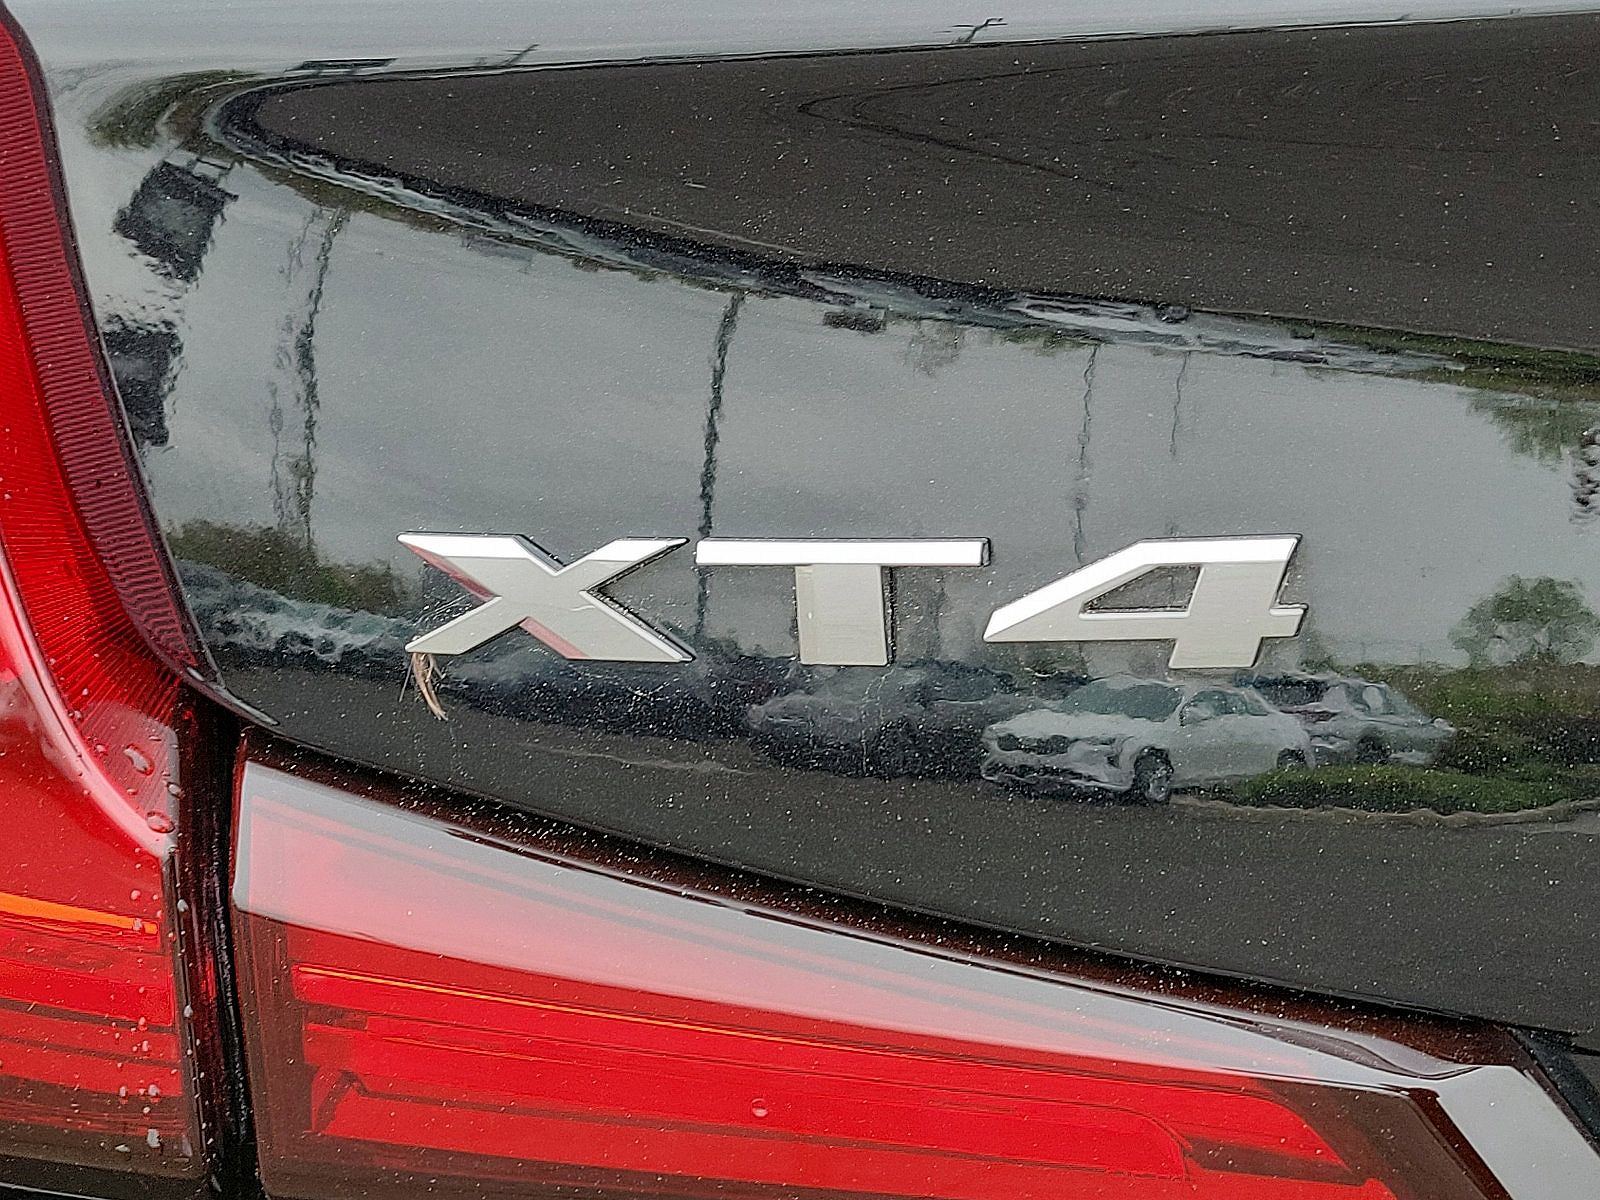 2021 Cadillac XT4 Premium Luxury image 29